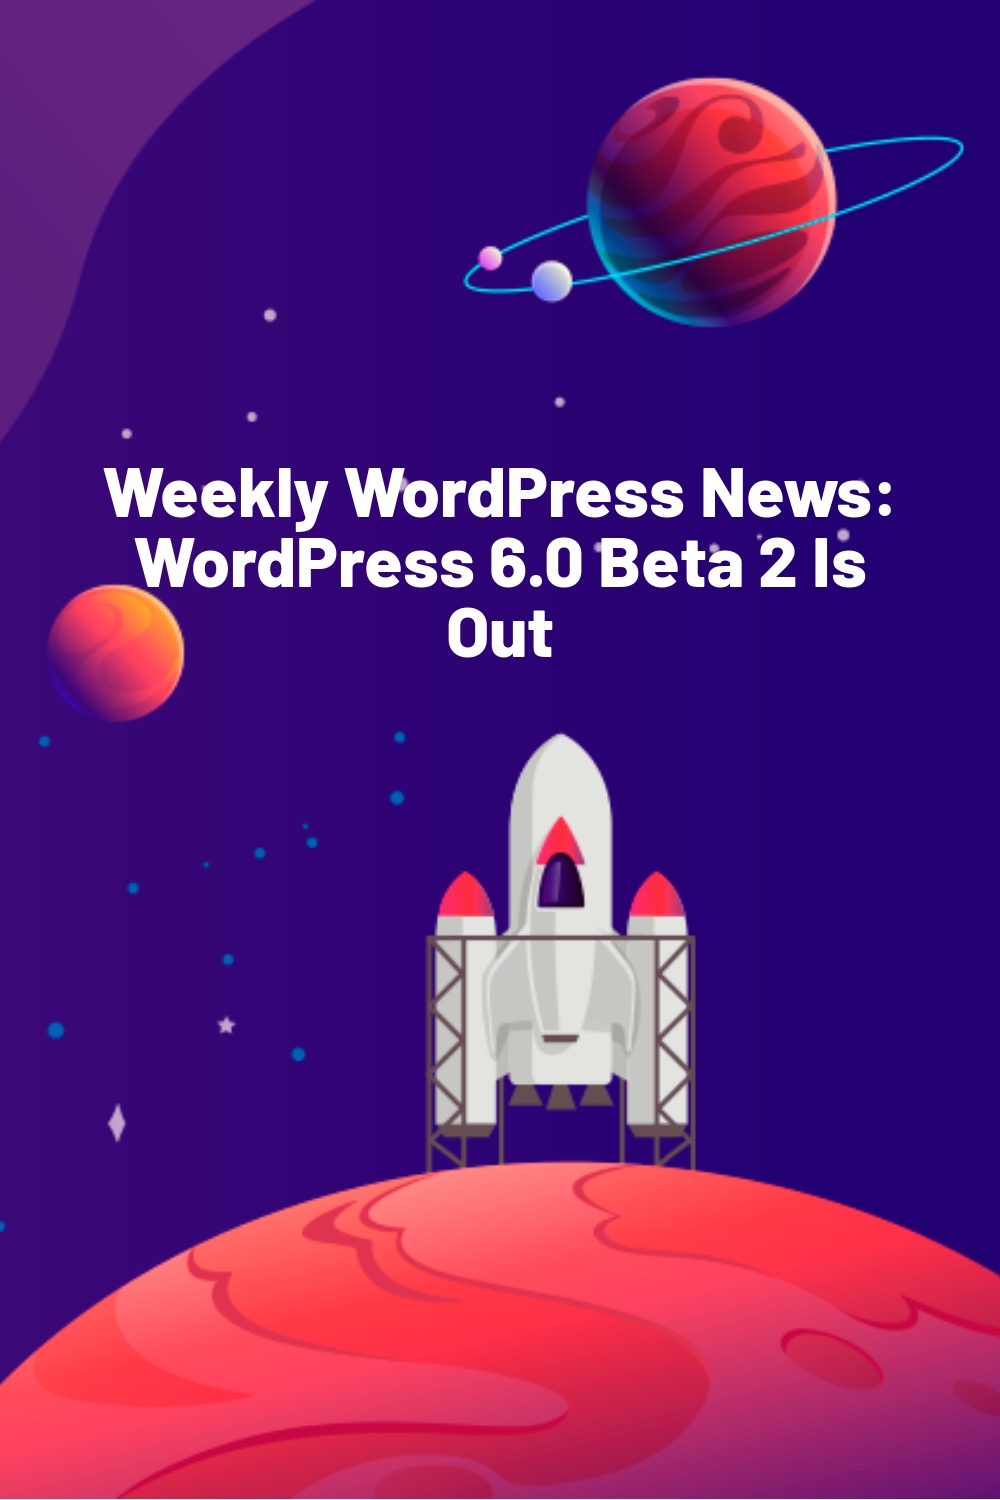 Weekly WordPress News: WordPress 6.0 Beta 2 Is Out